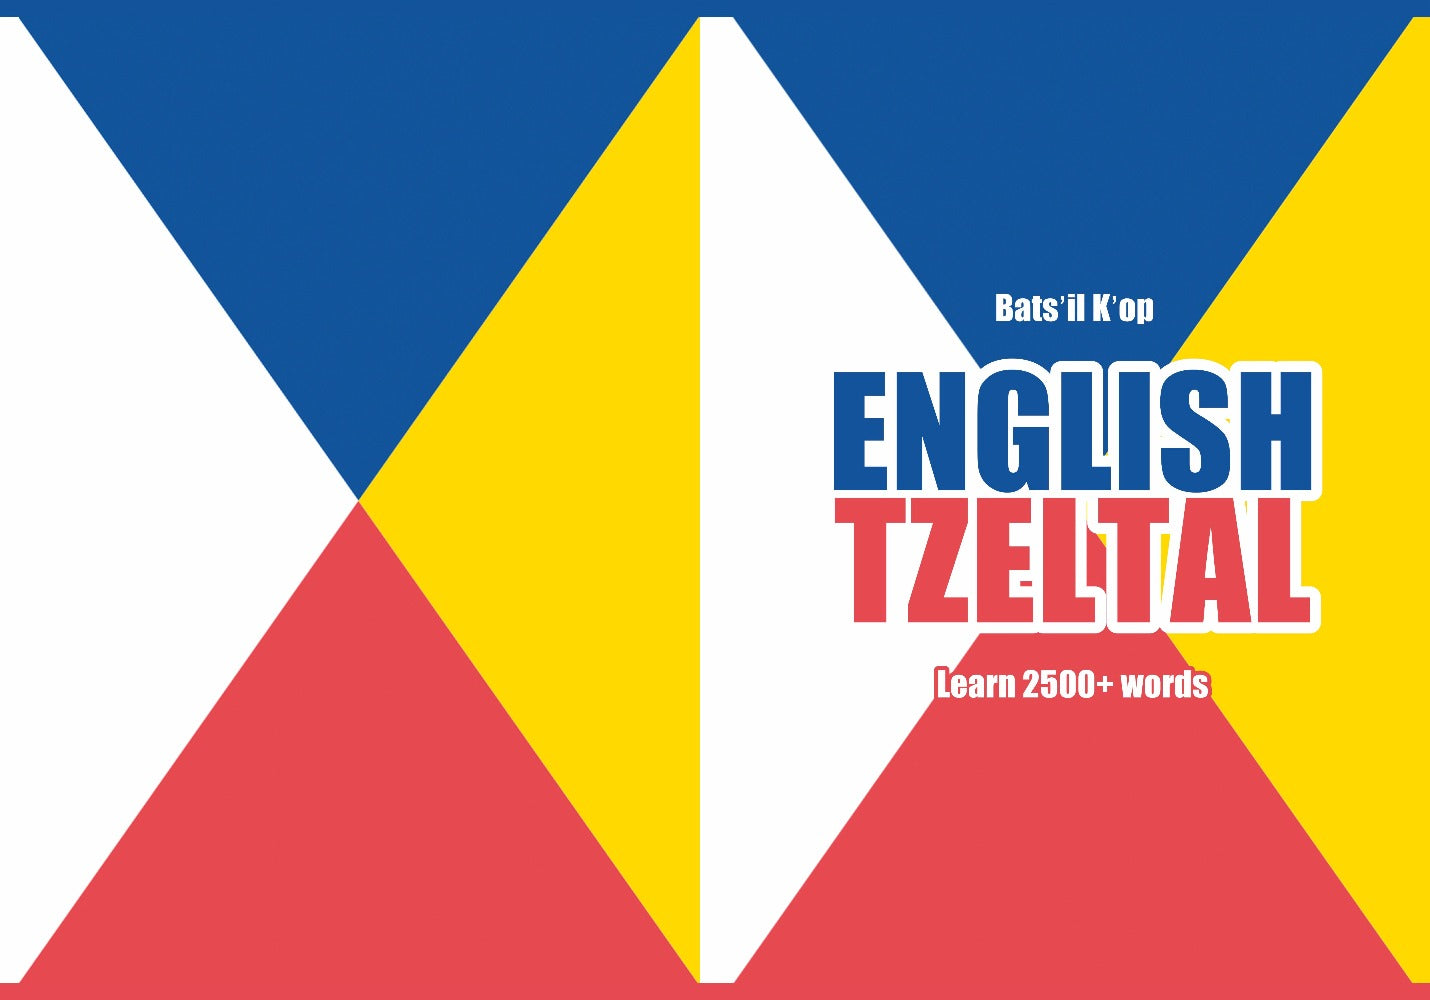 Tzeltal language learning notebook cover